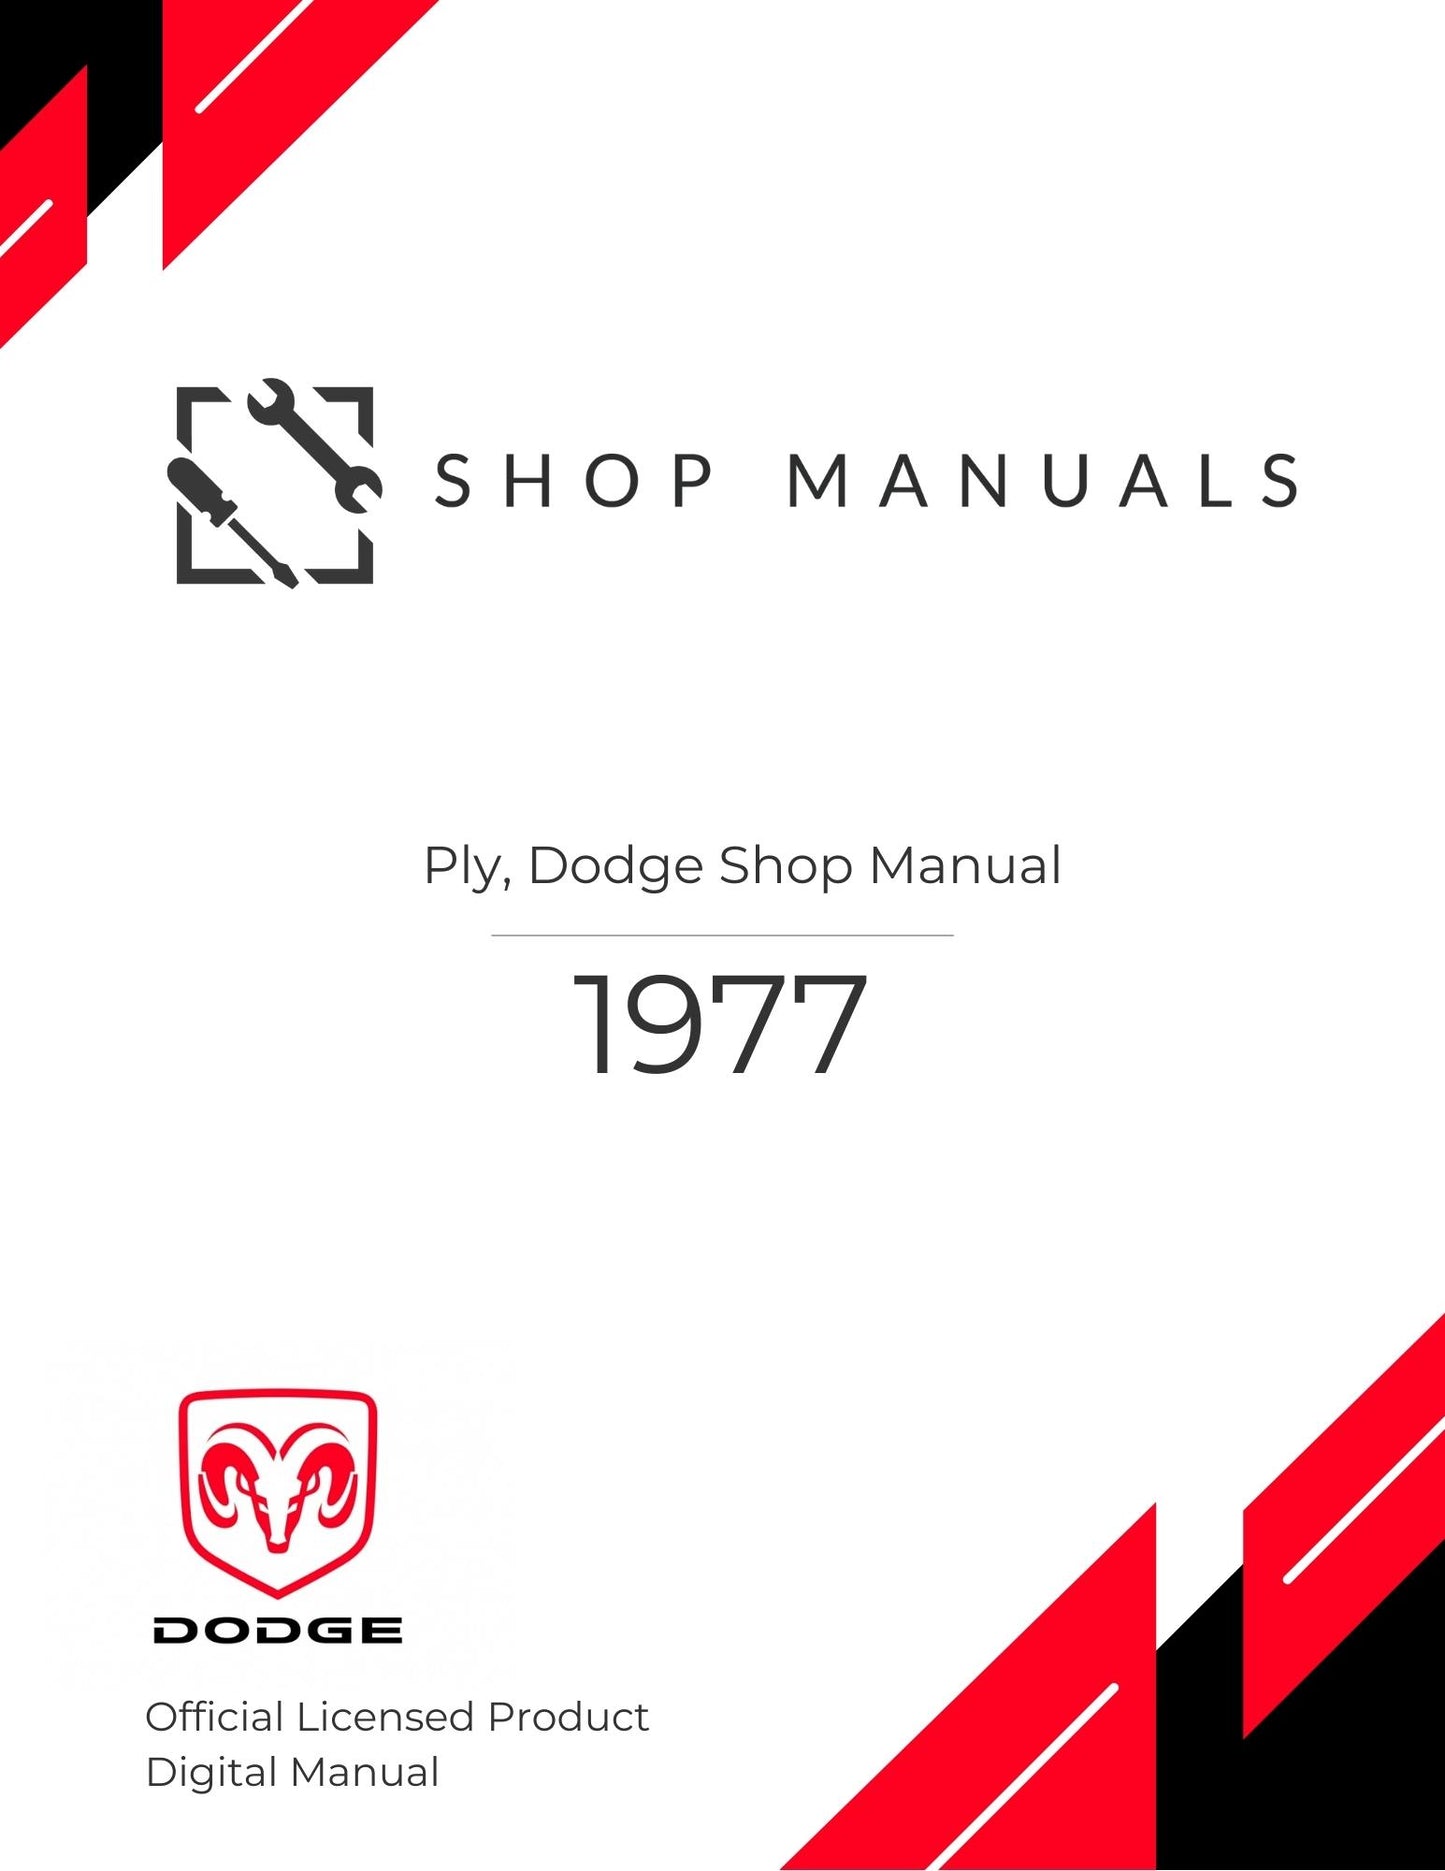 1977 Ply, Dodge Shop Manual